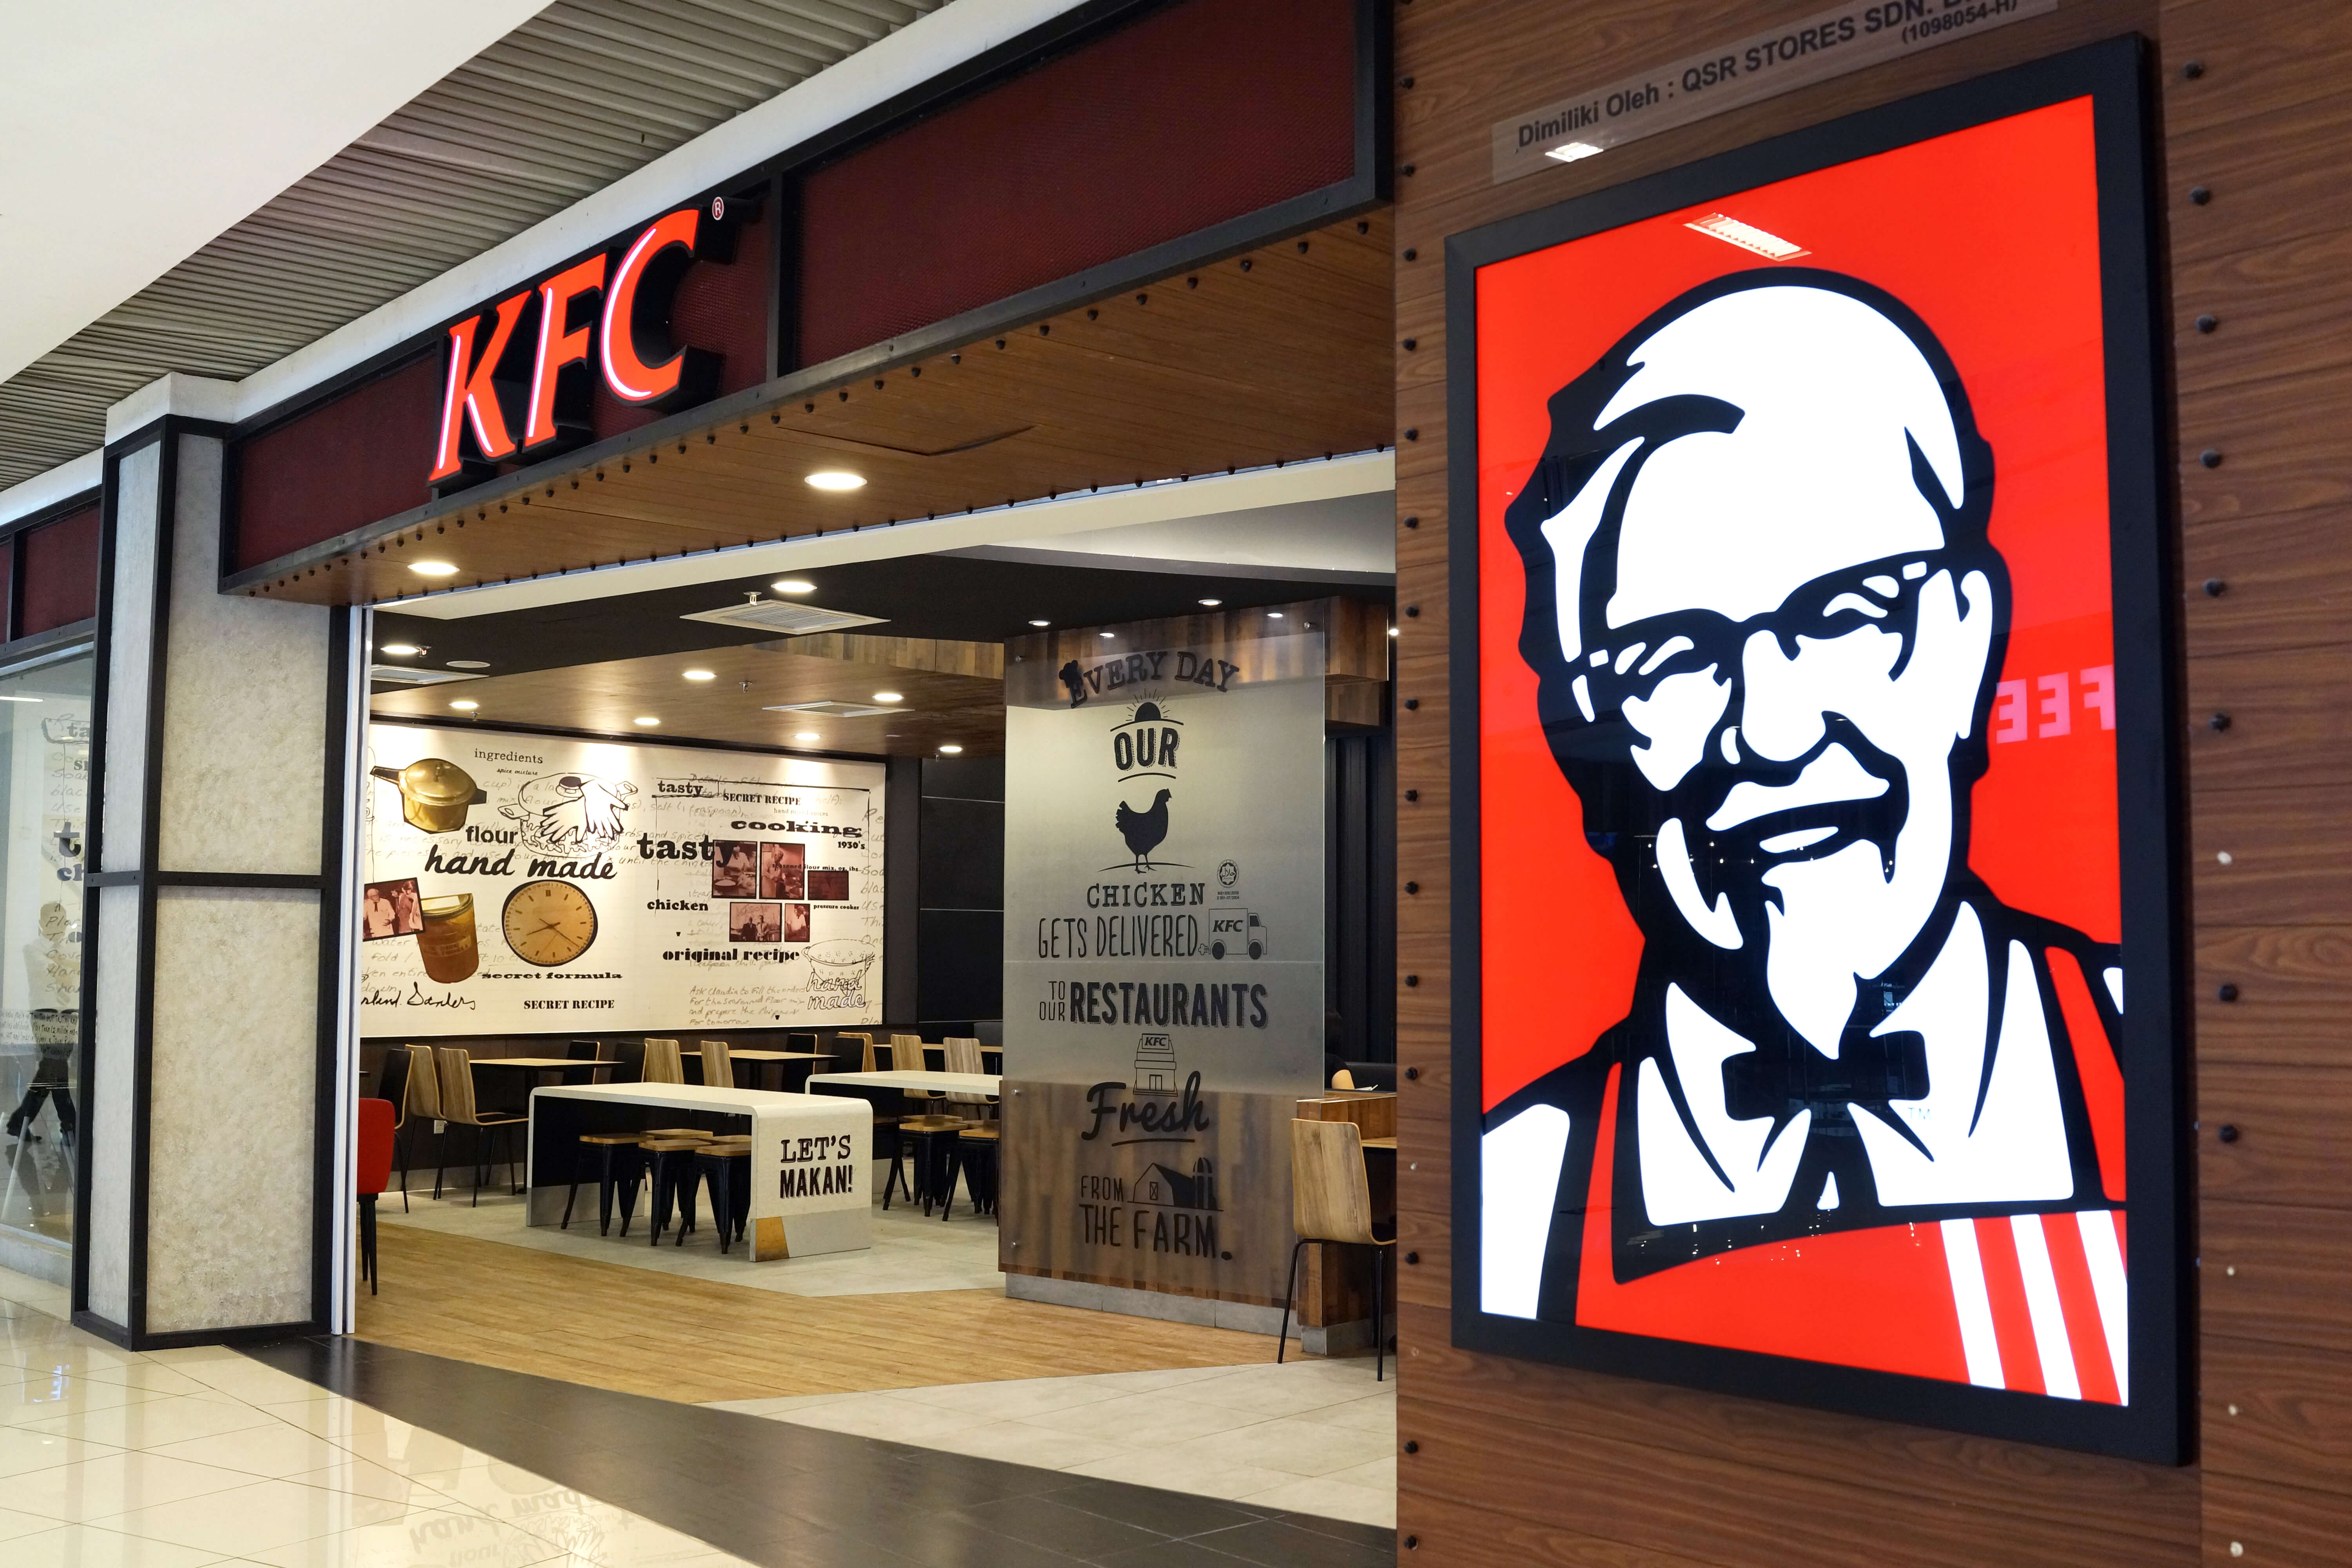 KFC has proved the value of location marketing